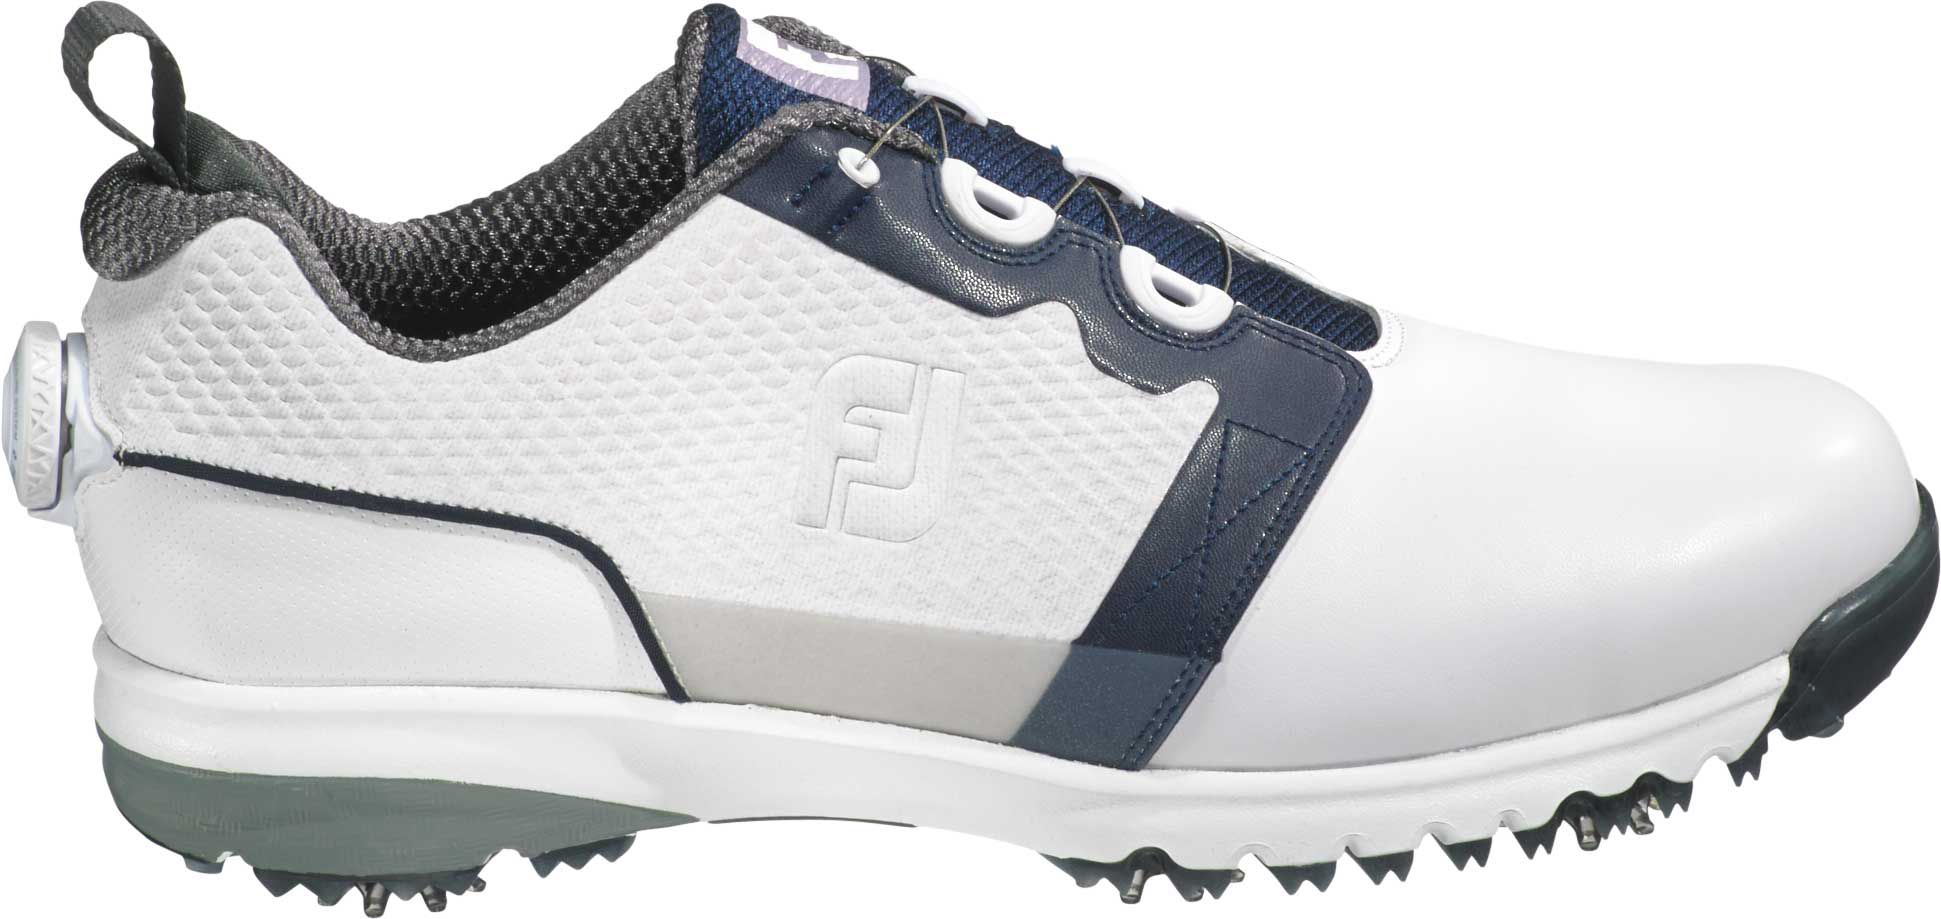 Men's Golf Shoes | DICK'S Sporting Goods